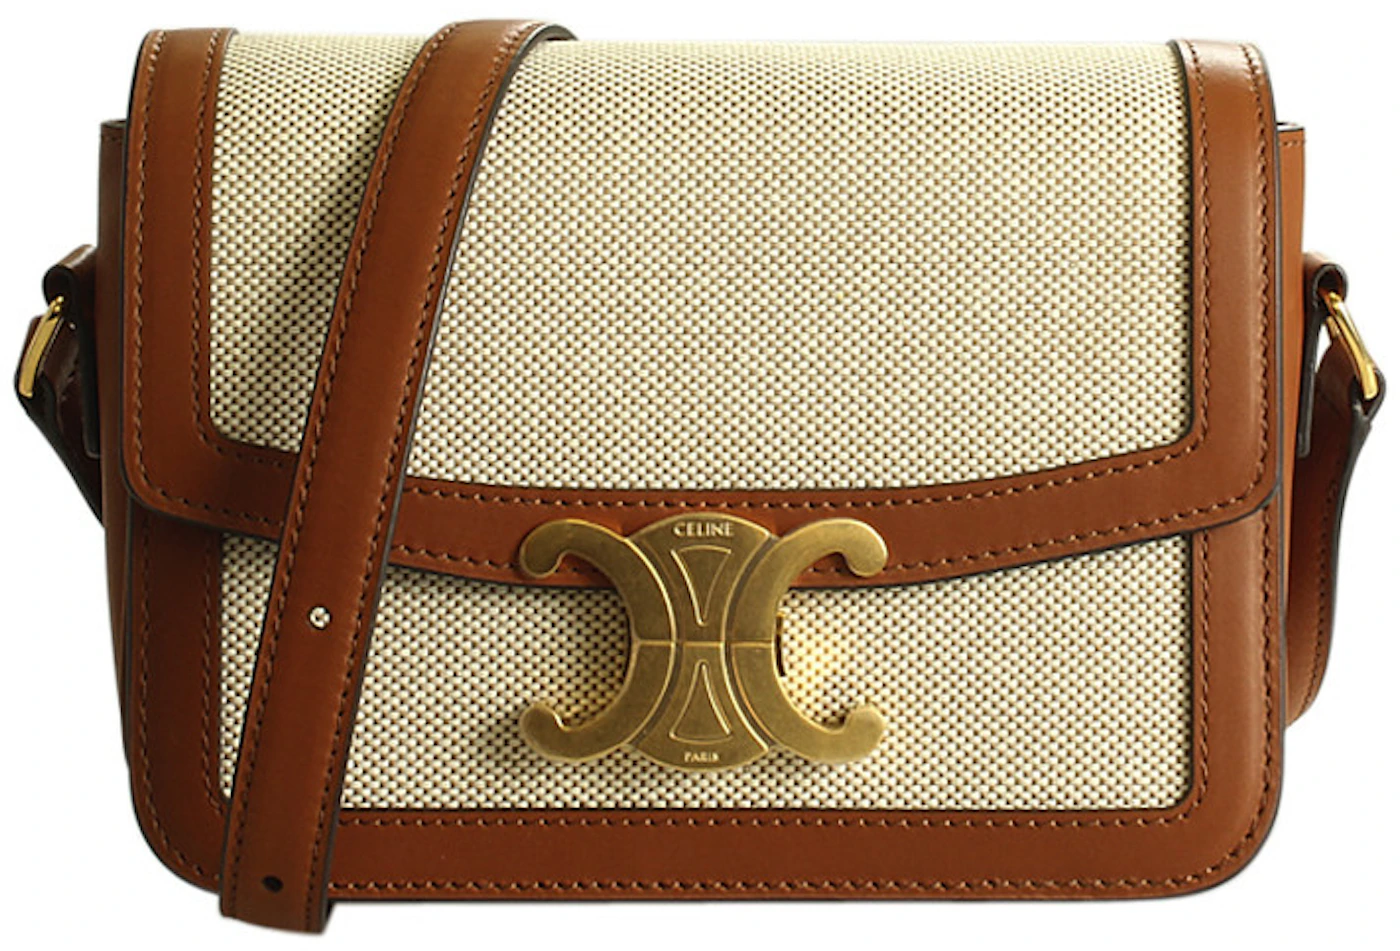 Triomphe leather handbag Celine Multicolour in Leather - 34438371